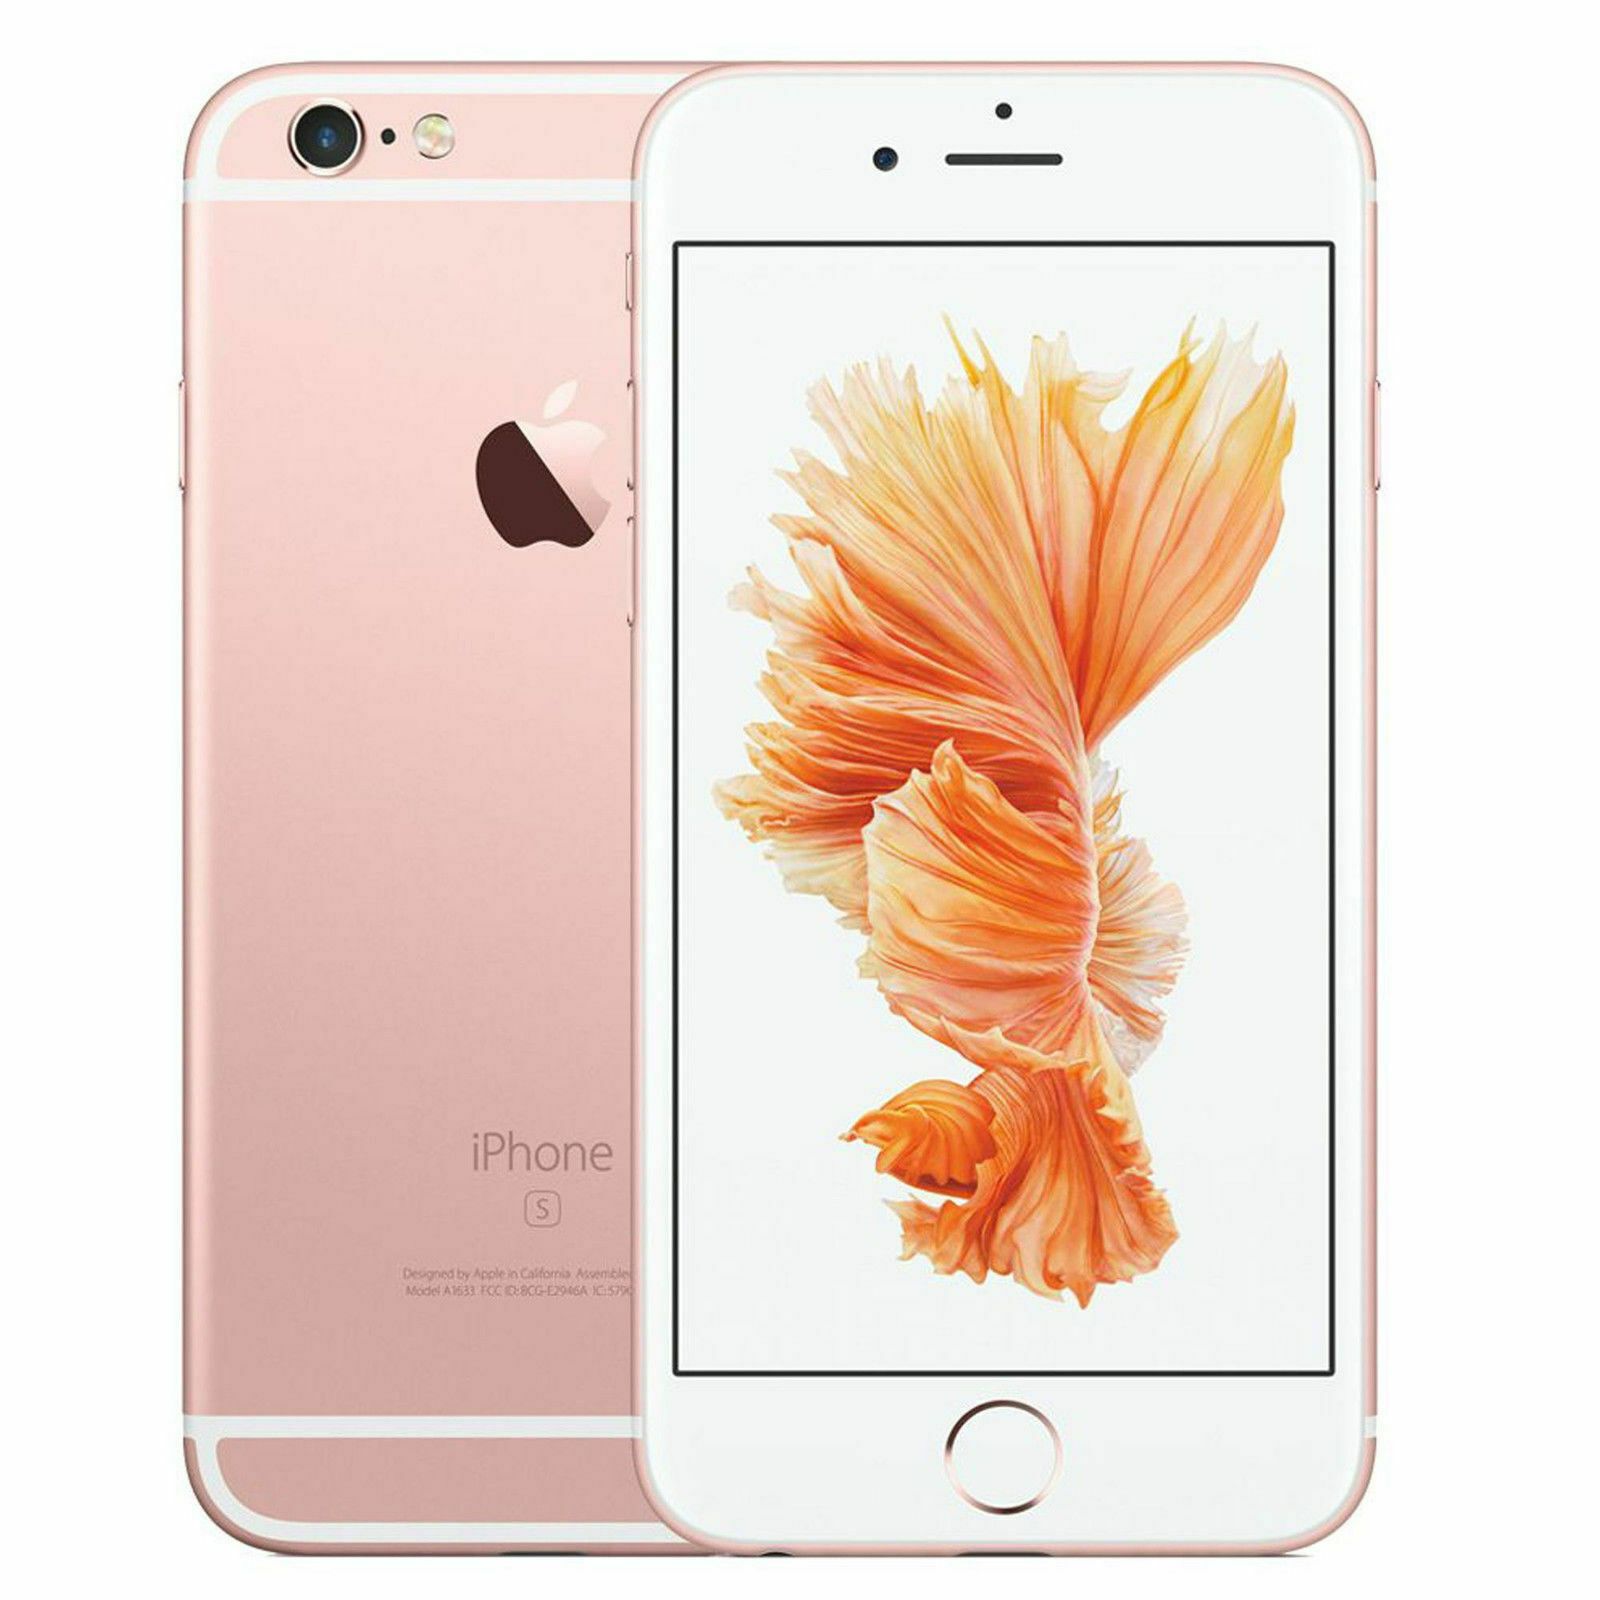 Apple iPhone 6s - 16GB - Rose Gold (Unlocked) A1633 (CDMA + GSM 